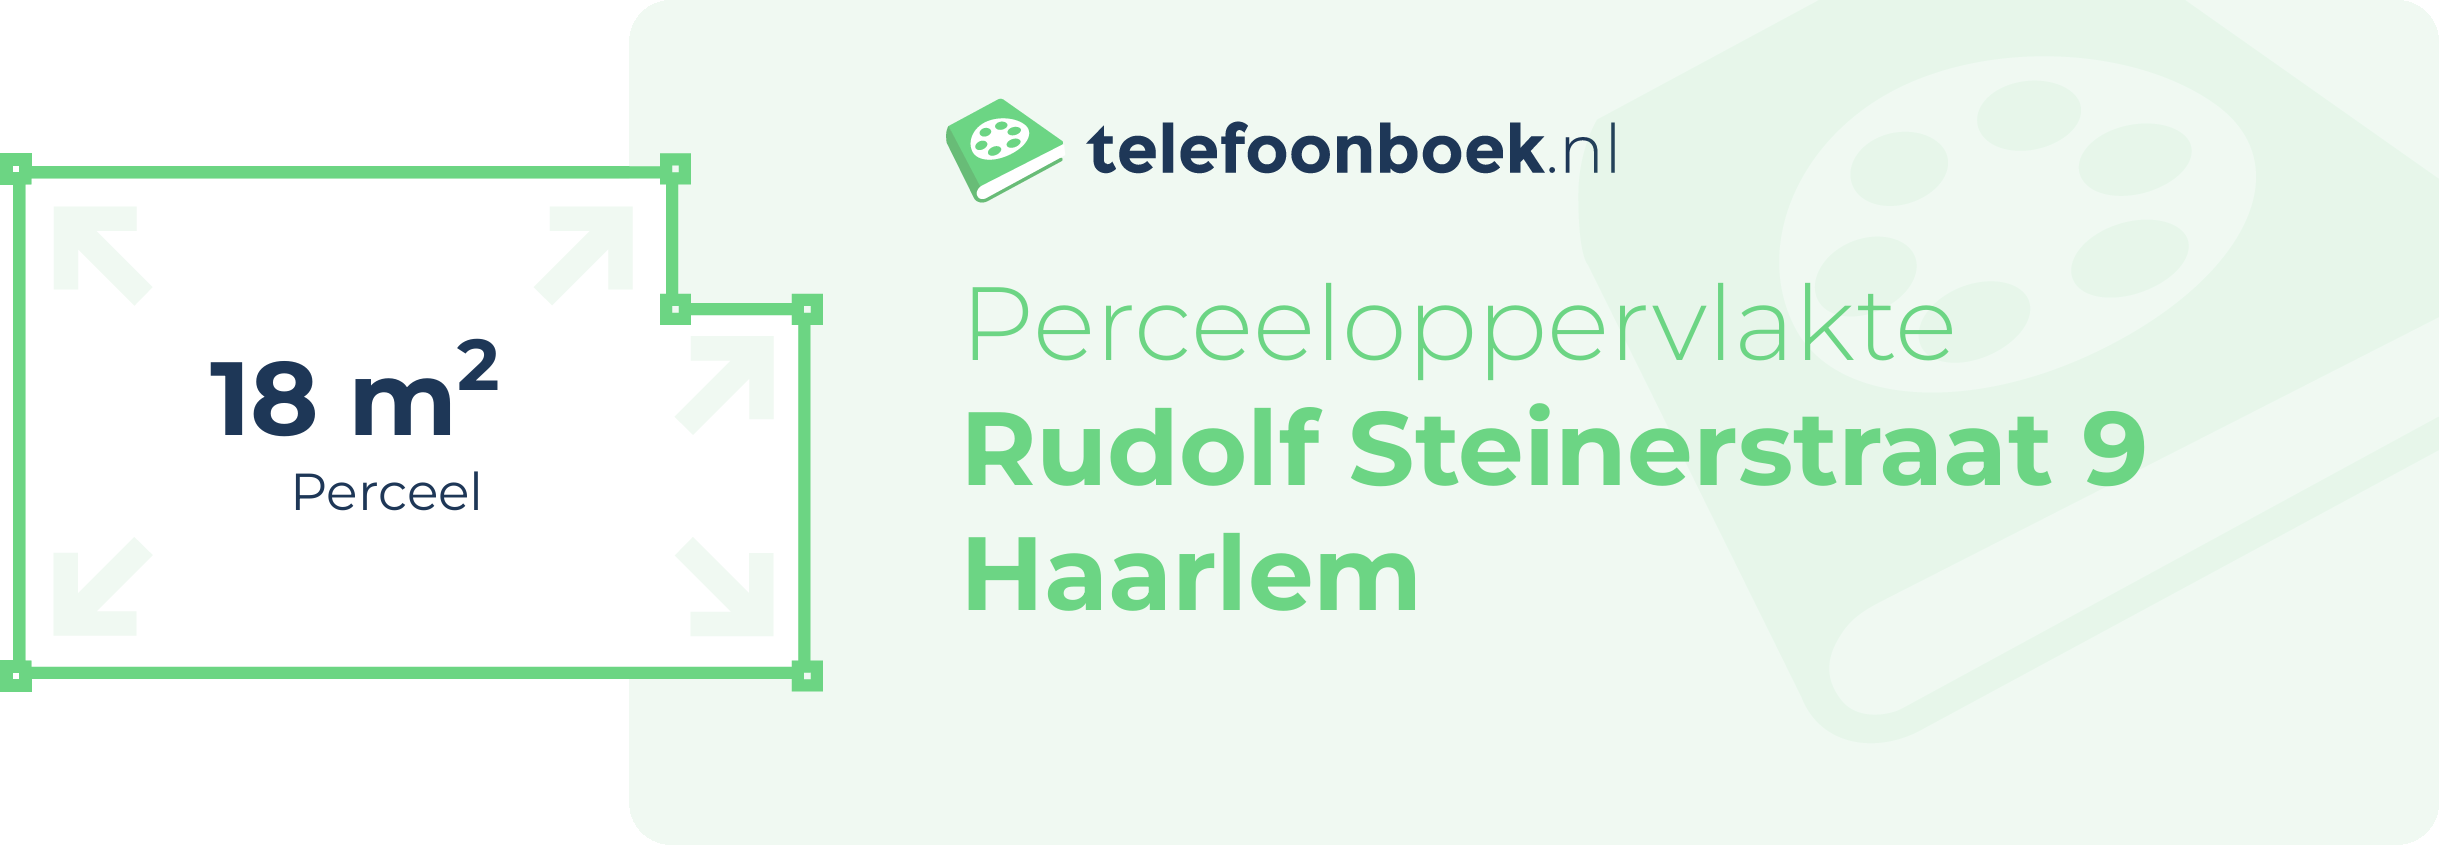 Perceeloppervlakte Rudolf Steinerstraat 9 Haarlem